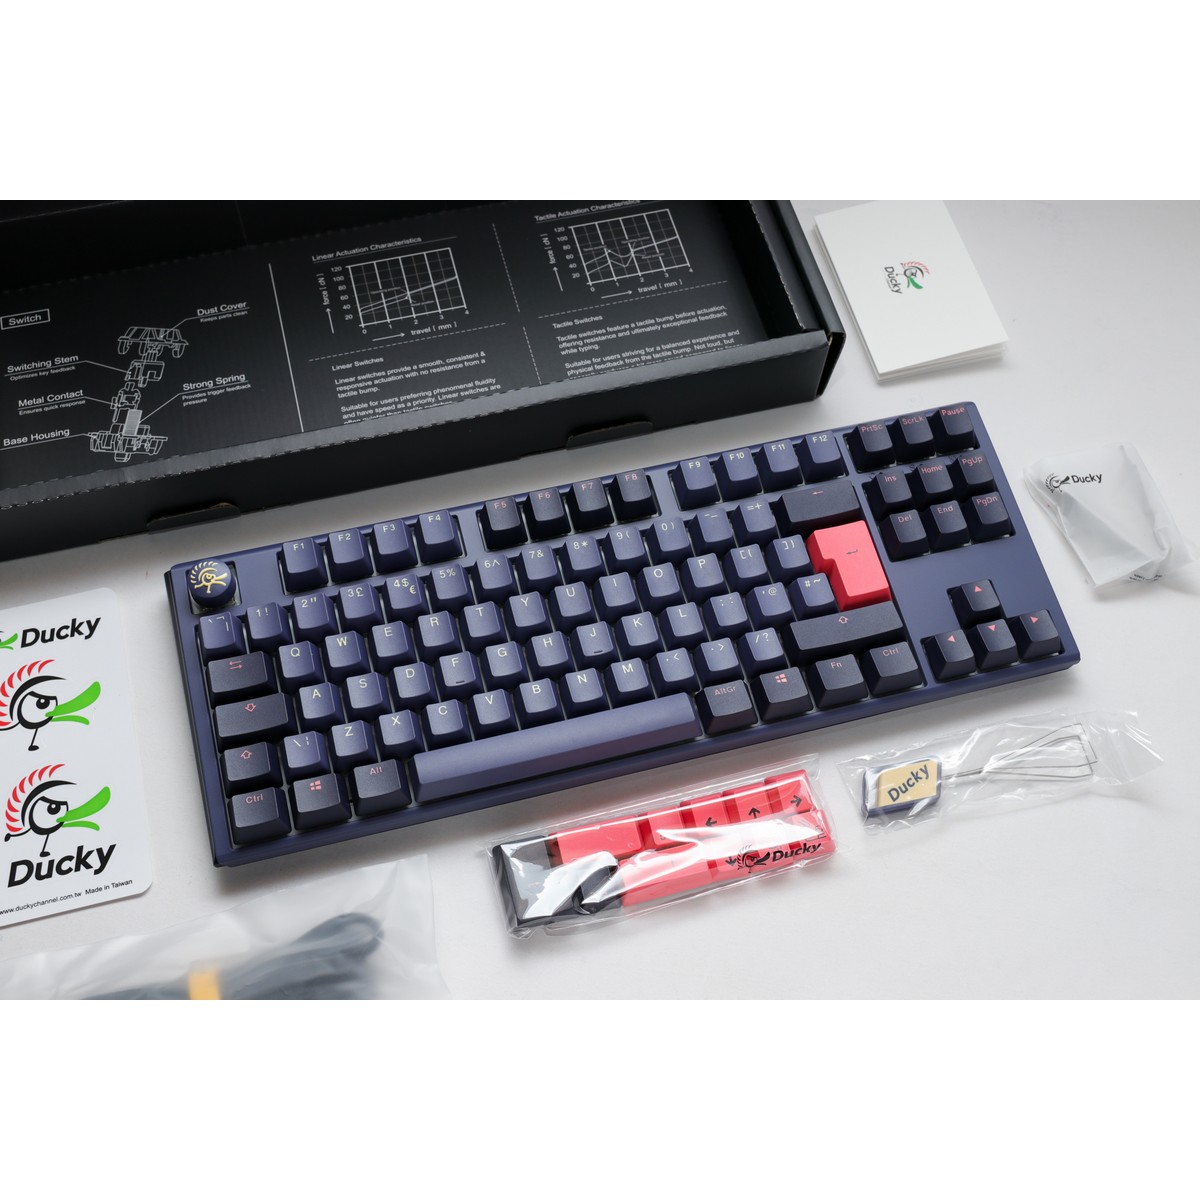 Ducky - Ducky One 3 Cosmic TKL 80% USB RGB Mechanical Gaming Keyboard Cherry MX Blue Switch - UK Layout